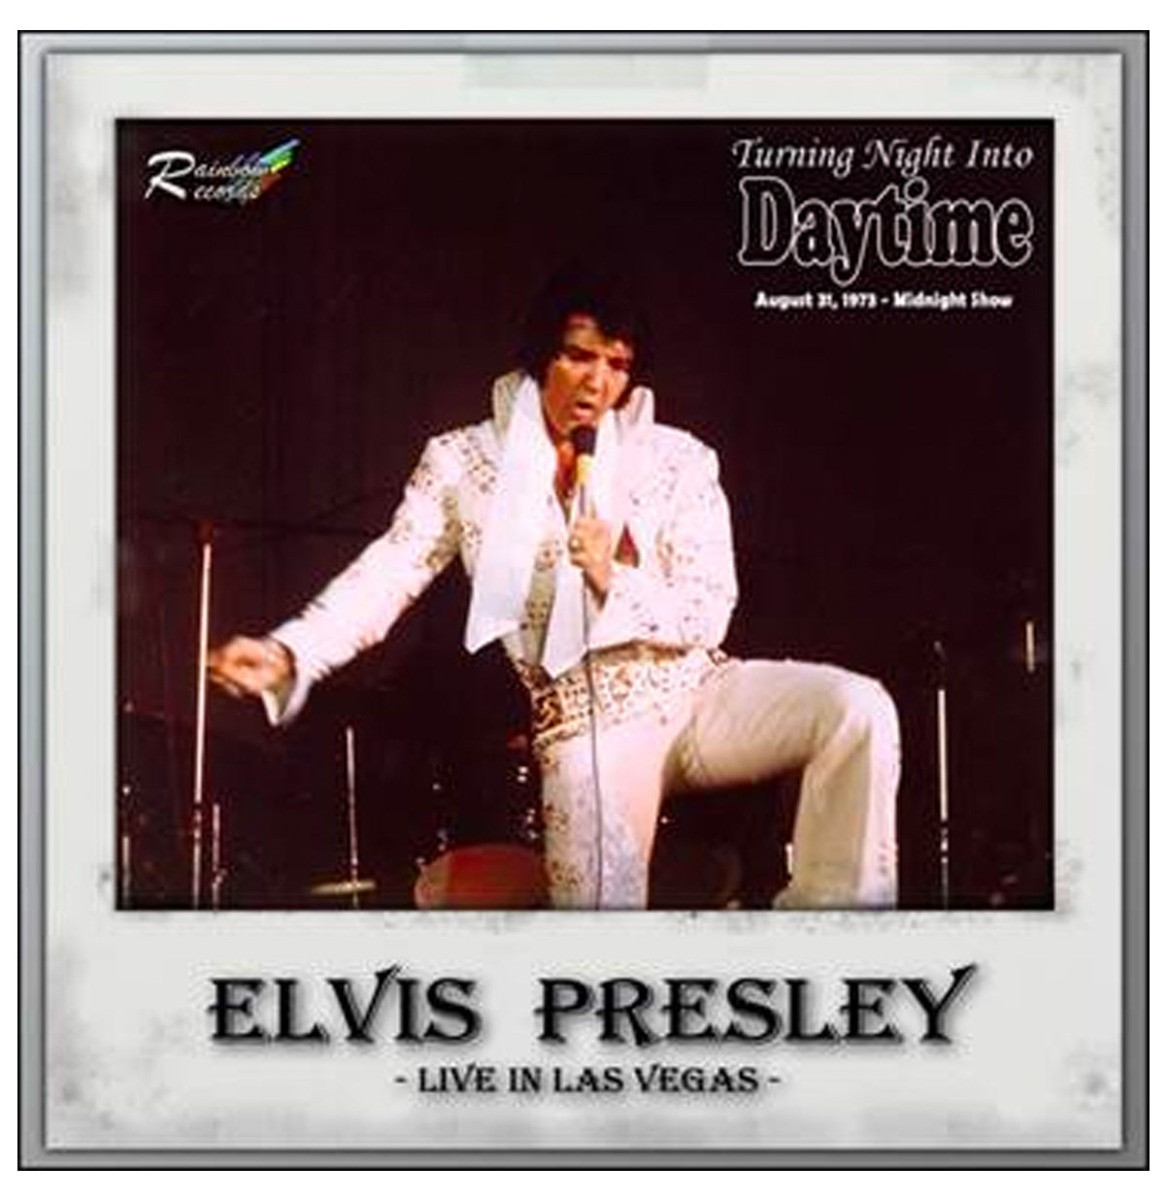 Elvis Presley - Turning Night Into Daytime Las Vegas August 31 1973 CD